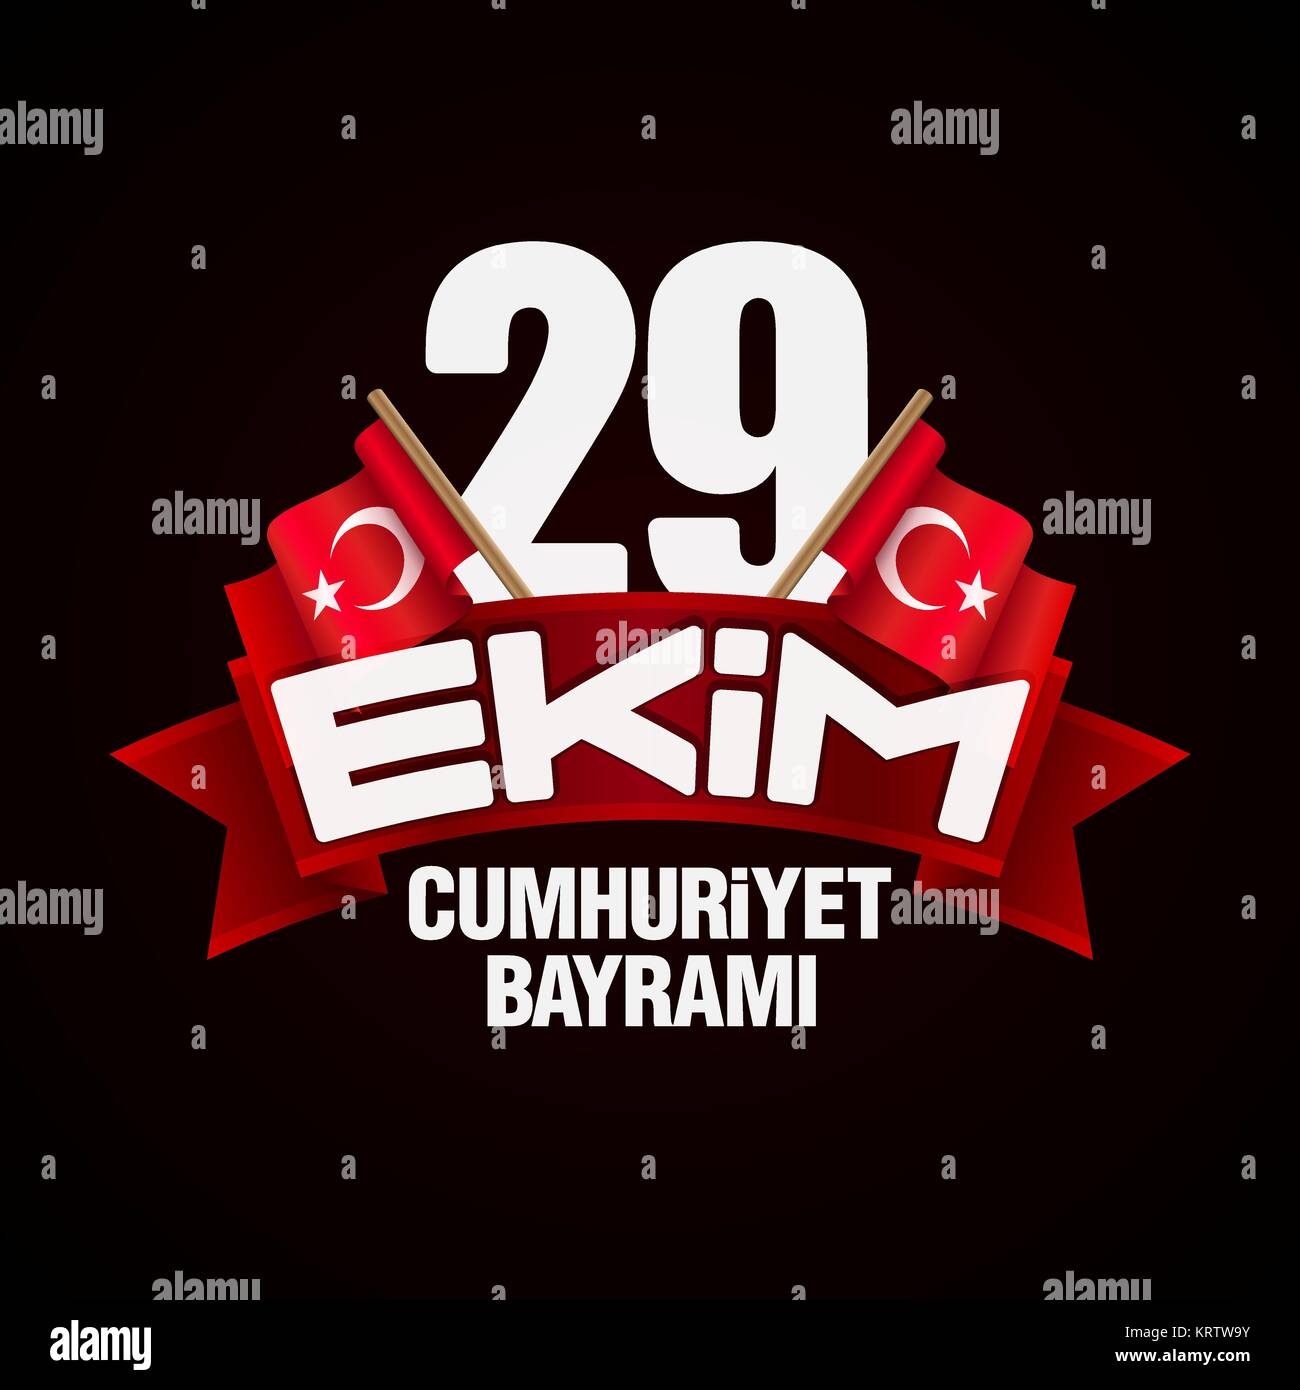 29 Ekim Cumhuriyet Bayrami Tebrik Karti - October 29 Republic Day of Turkey. Greeting card concept on black background. Stock Vector